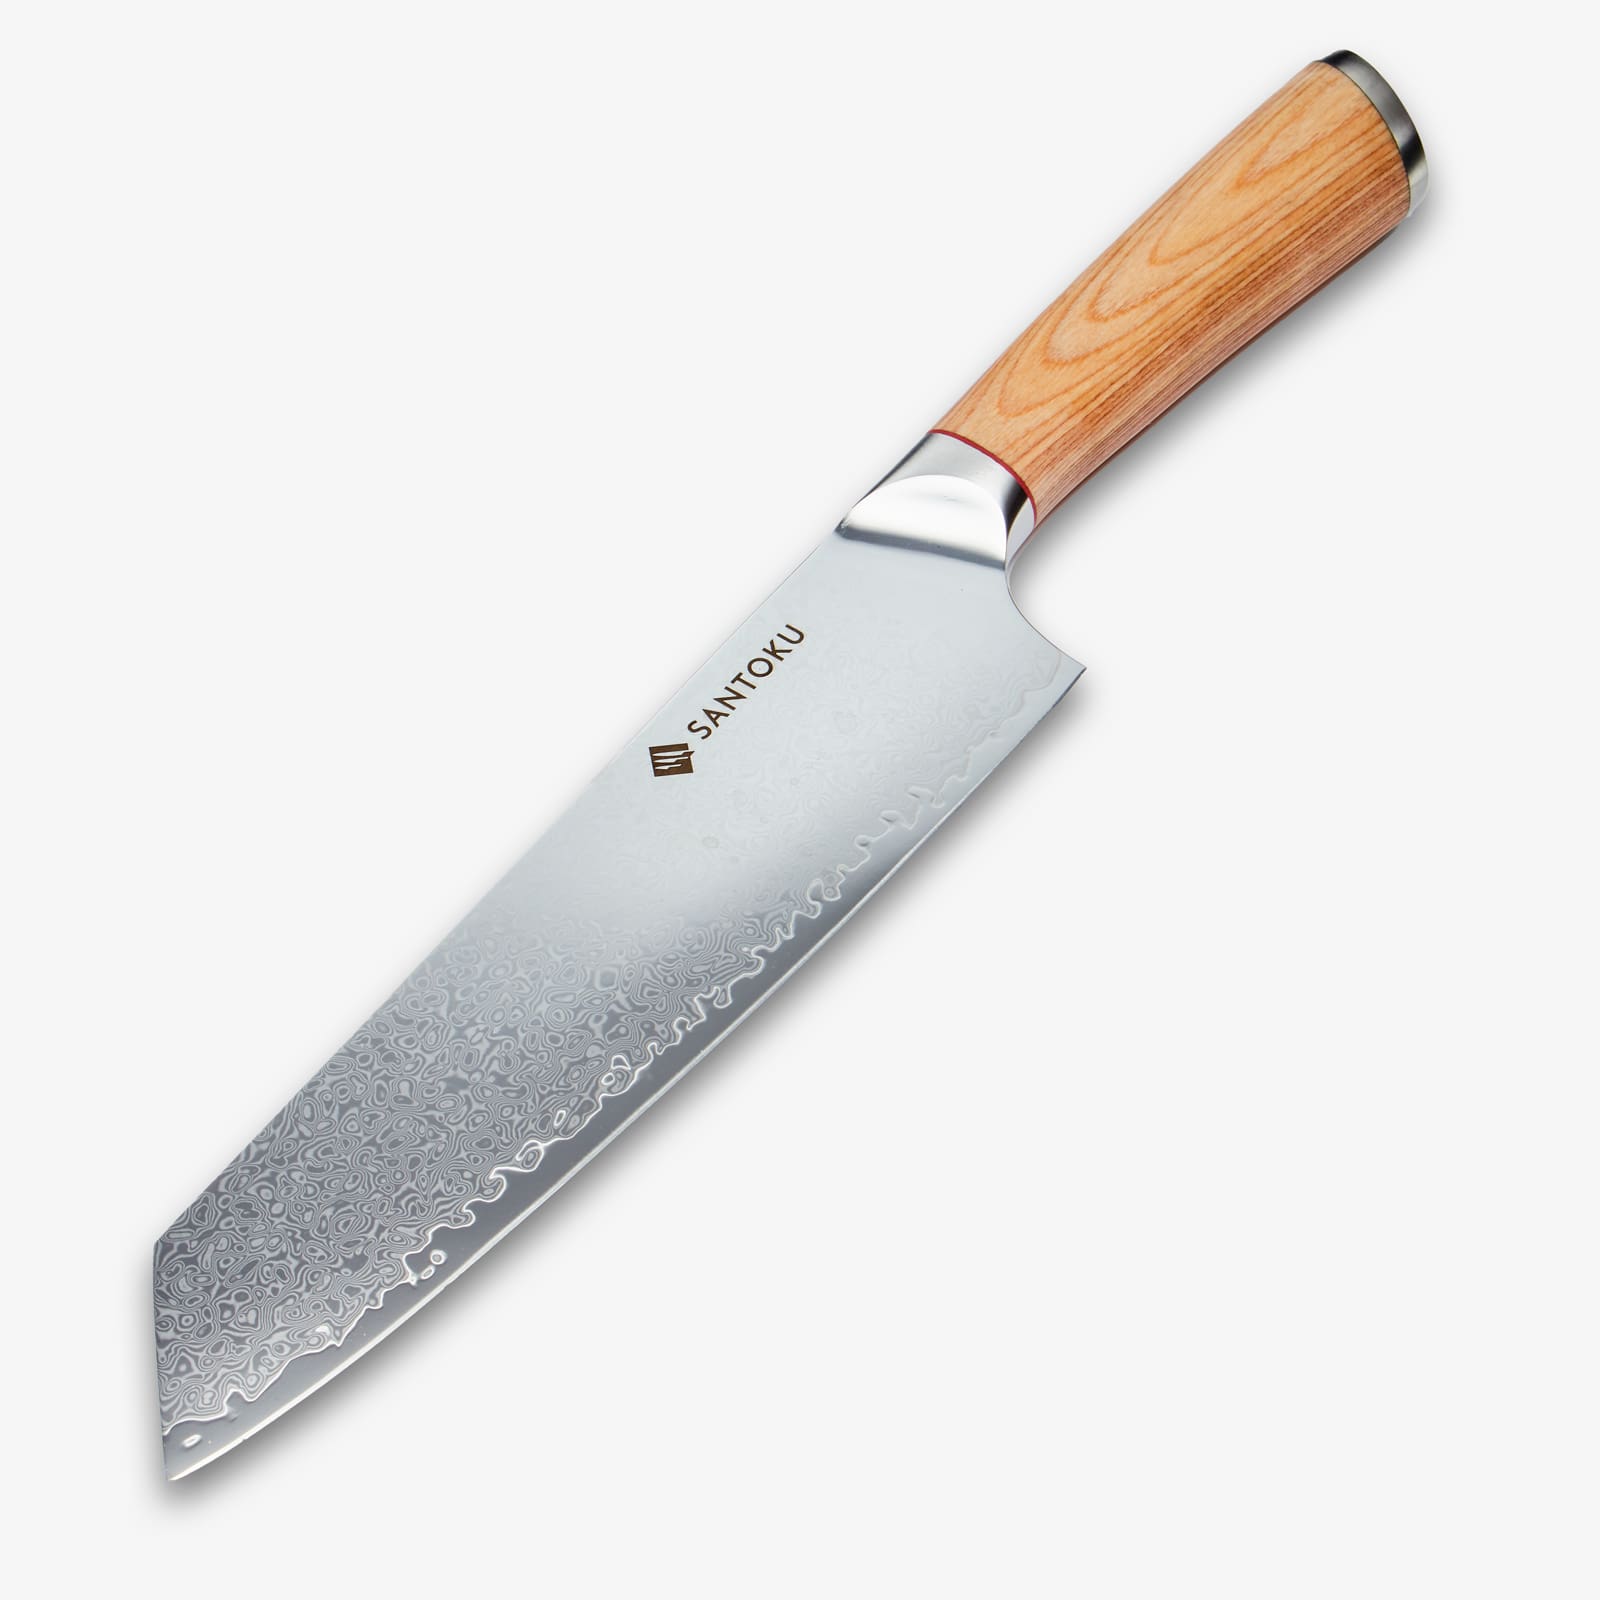 Харута (はる た) 8 -дюймовый нож Кирицук